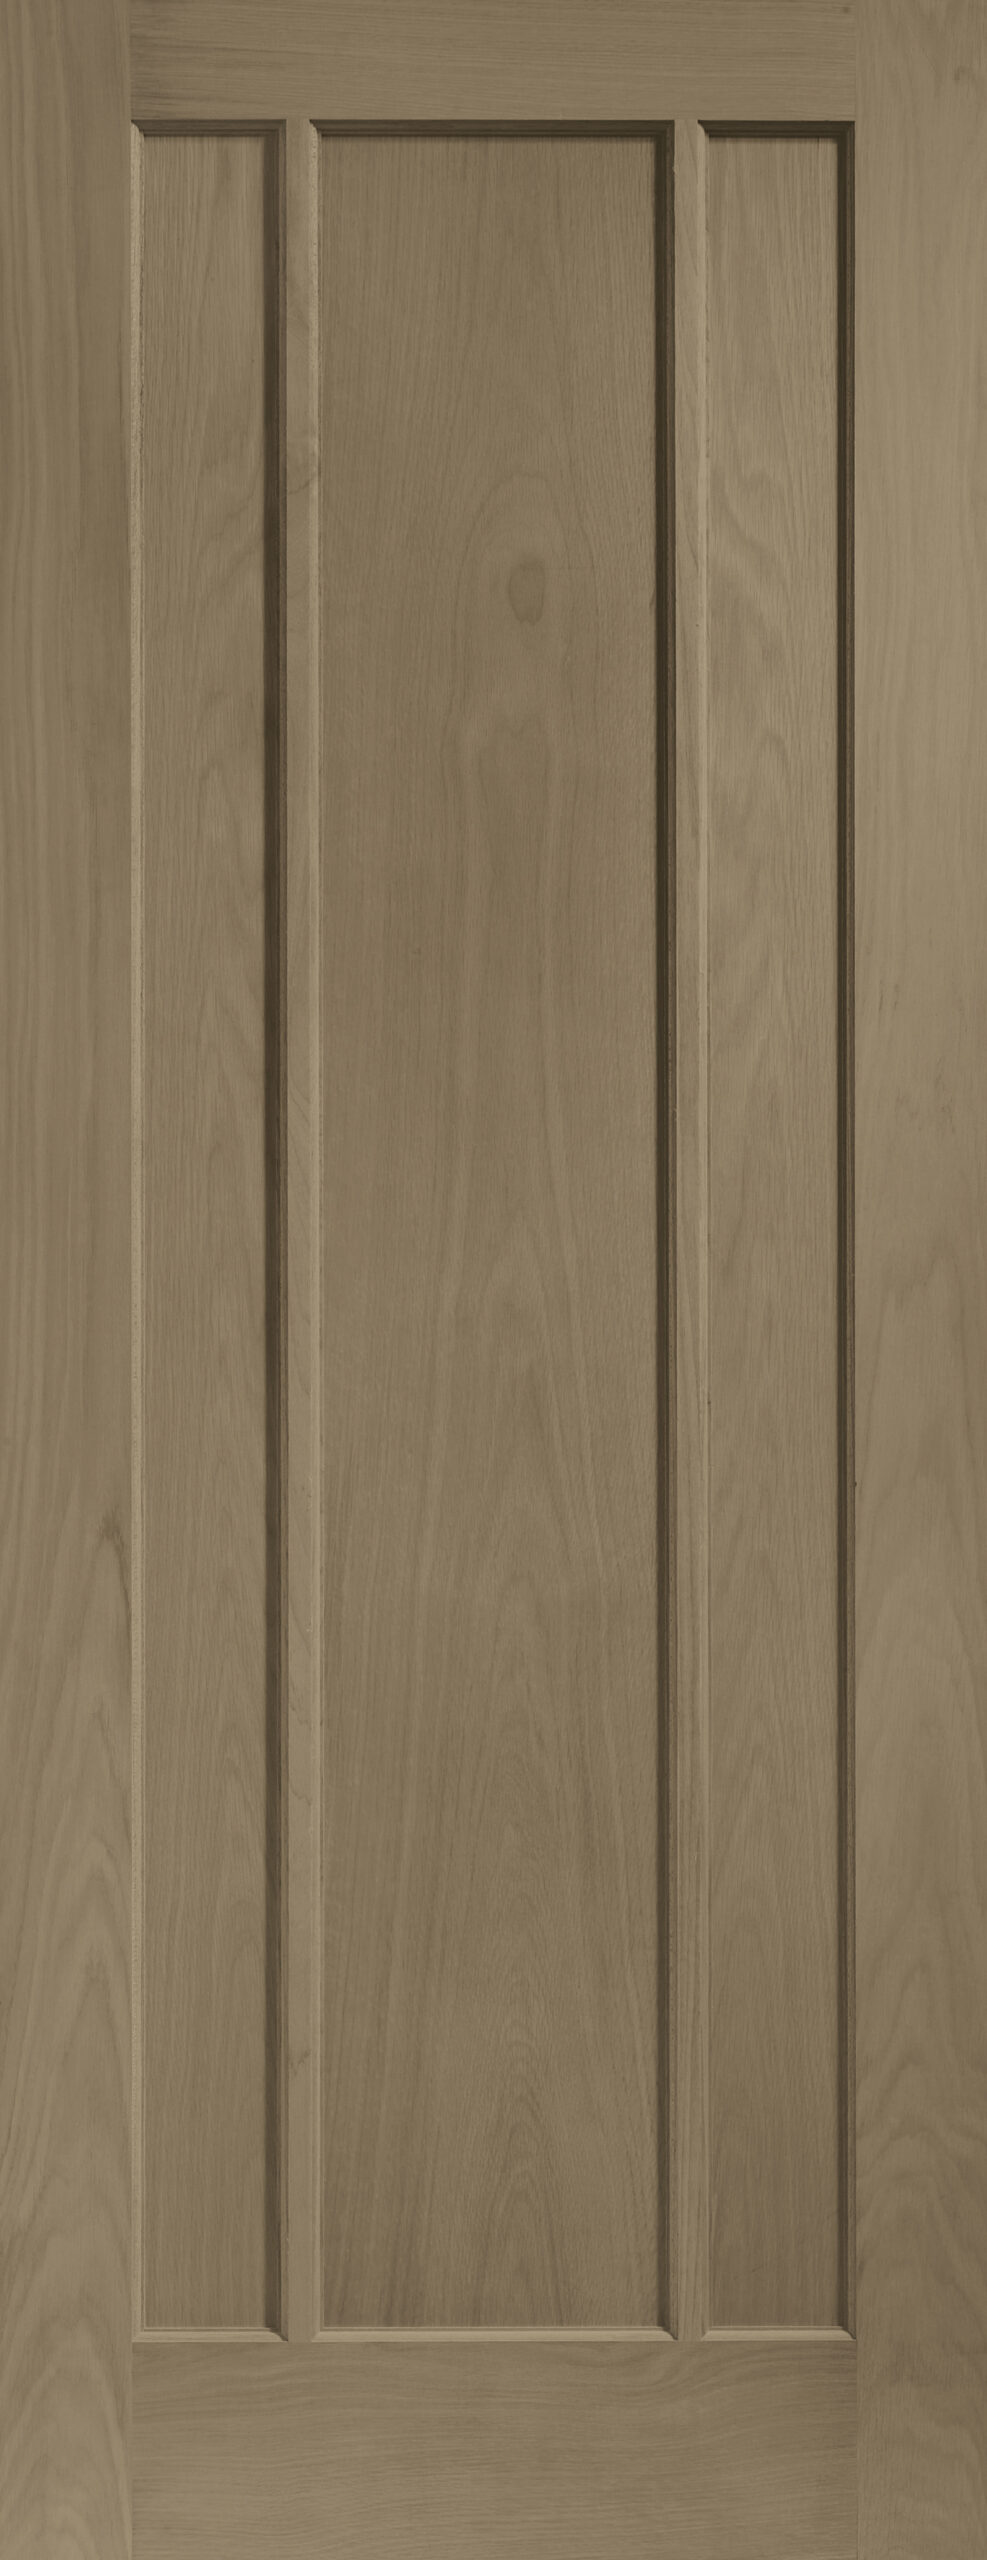 Worcester Internal Oak Fire Door – 1981 x 762 x 44 mm, Cappuccino